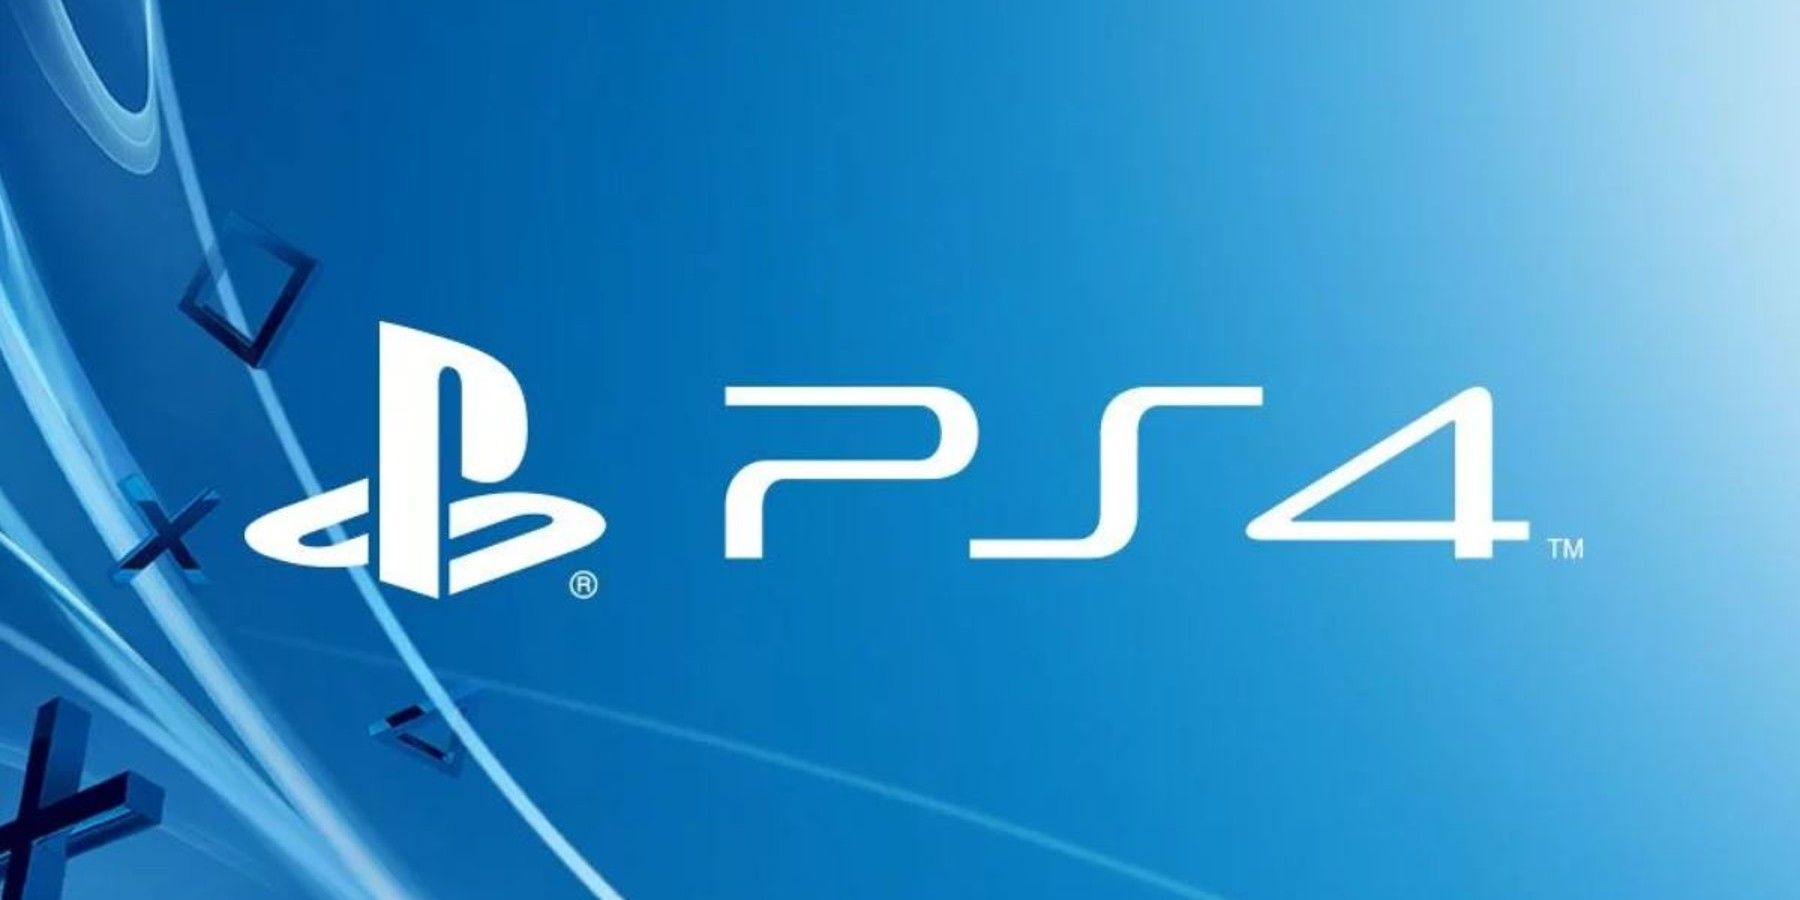 playstation 4 logo blue